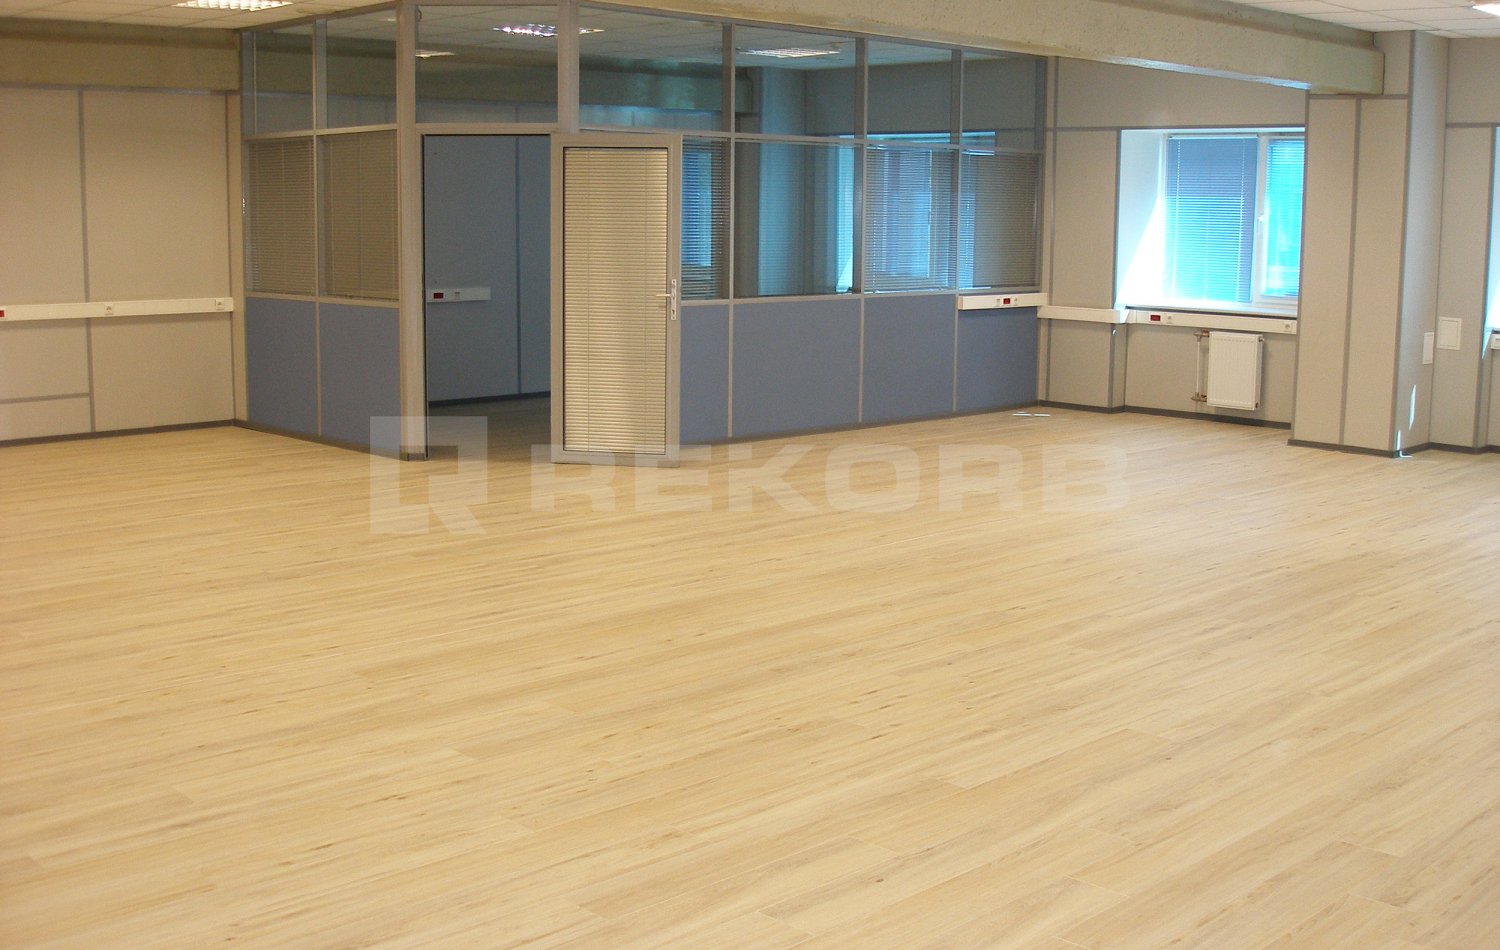 Офис в аренду 135 кв.м. в БЦ Воронцовъ - фото 1